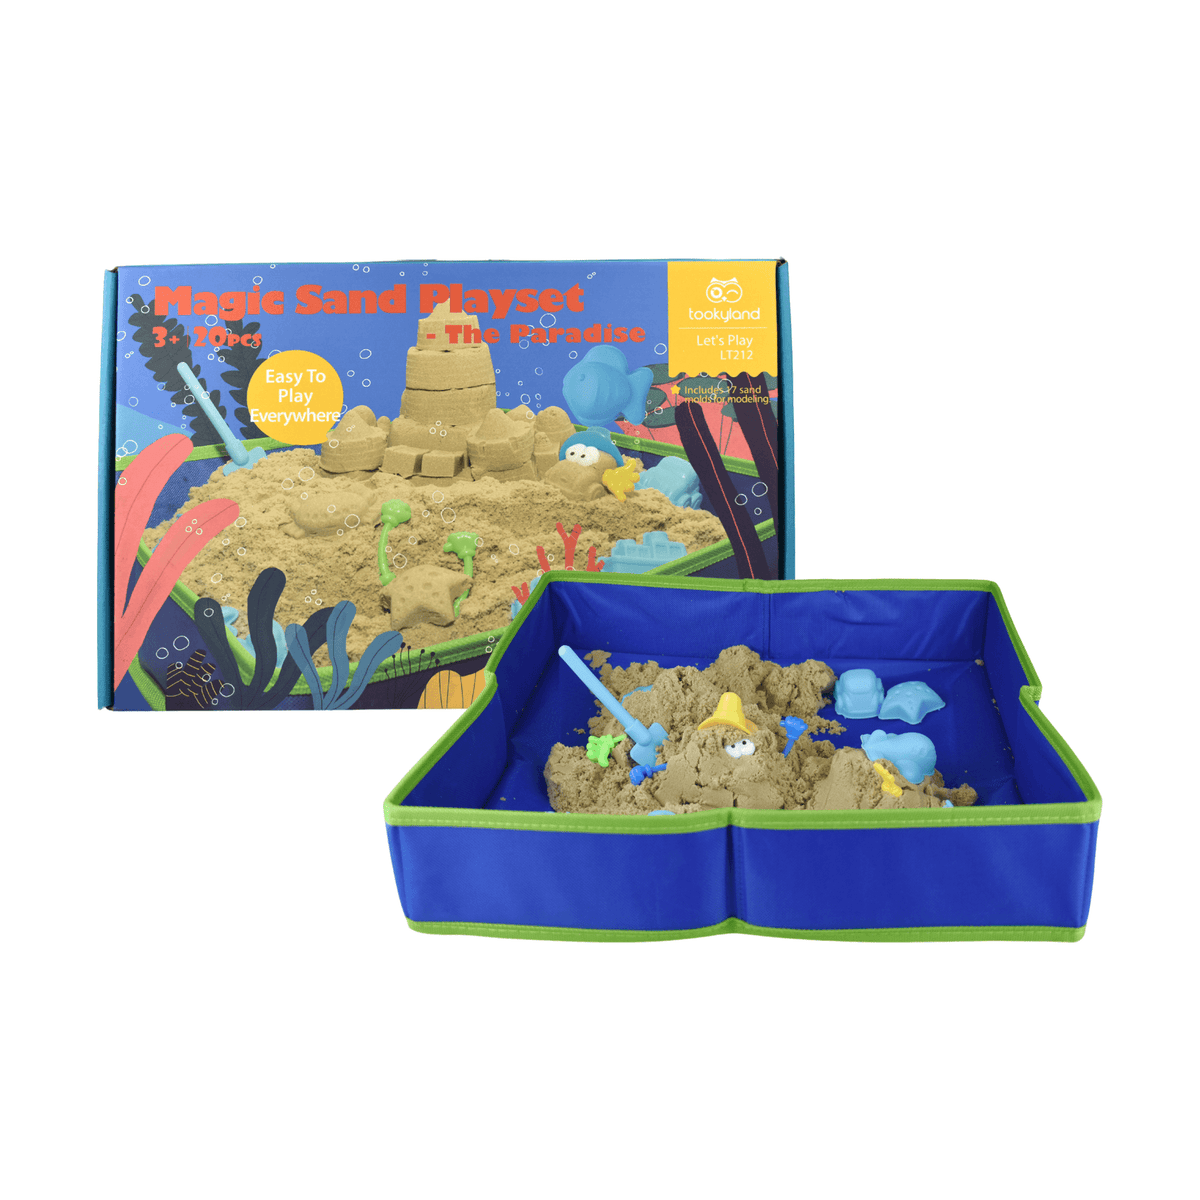 Magic Star Paradise Sand Playkit - 2Kg - Toybox Tales